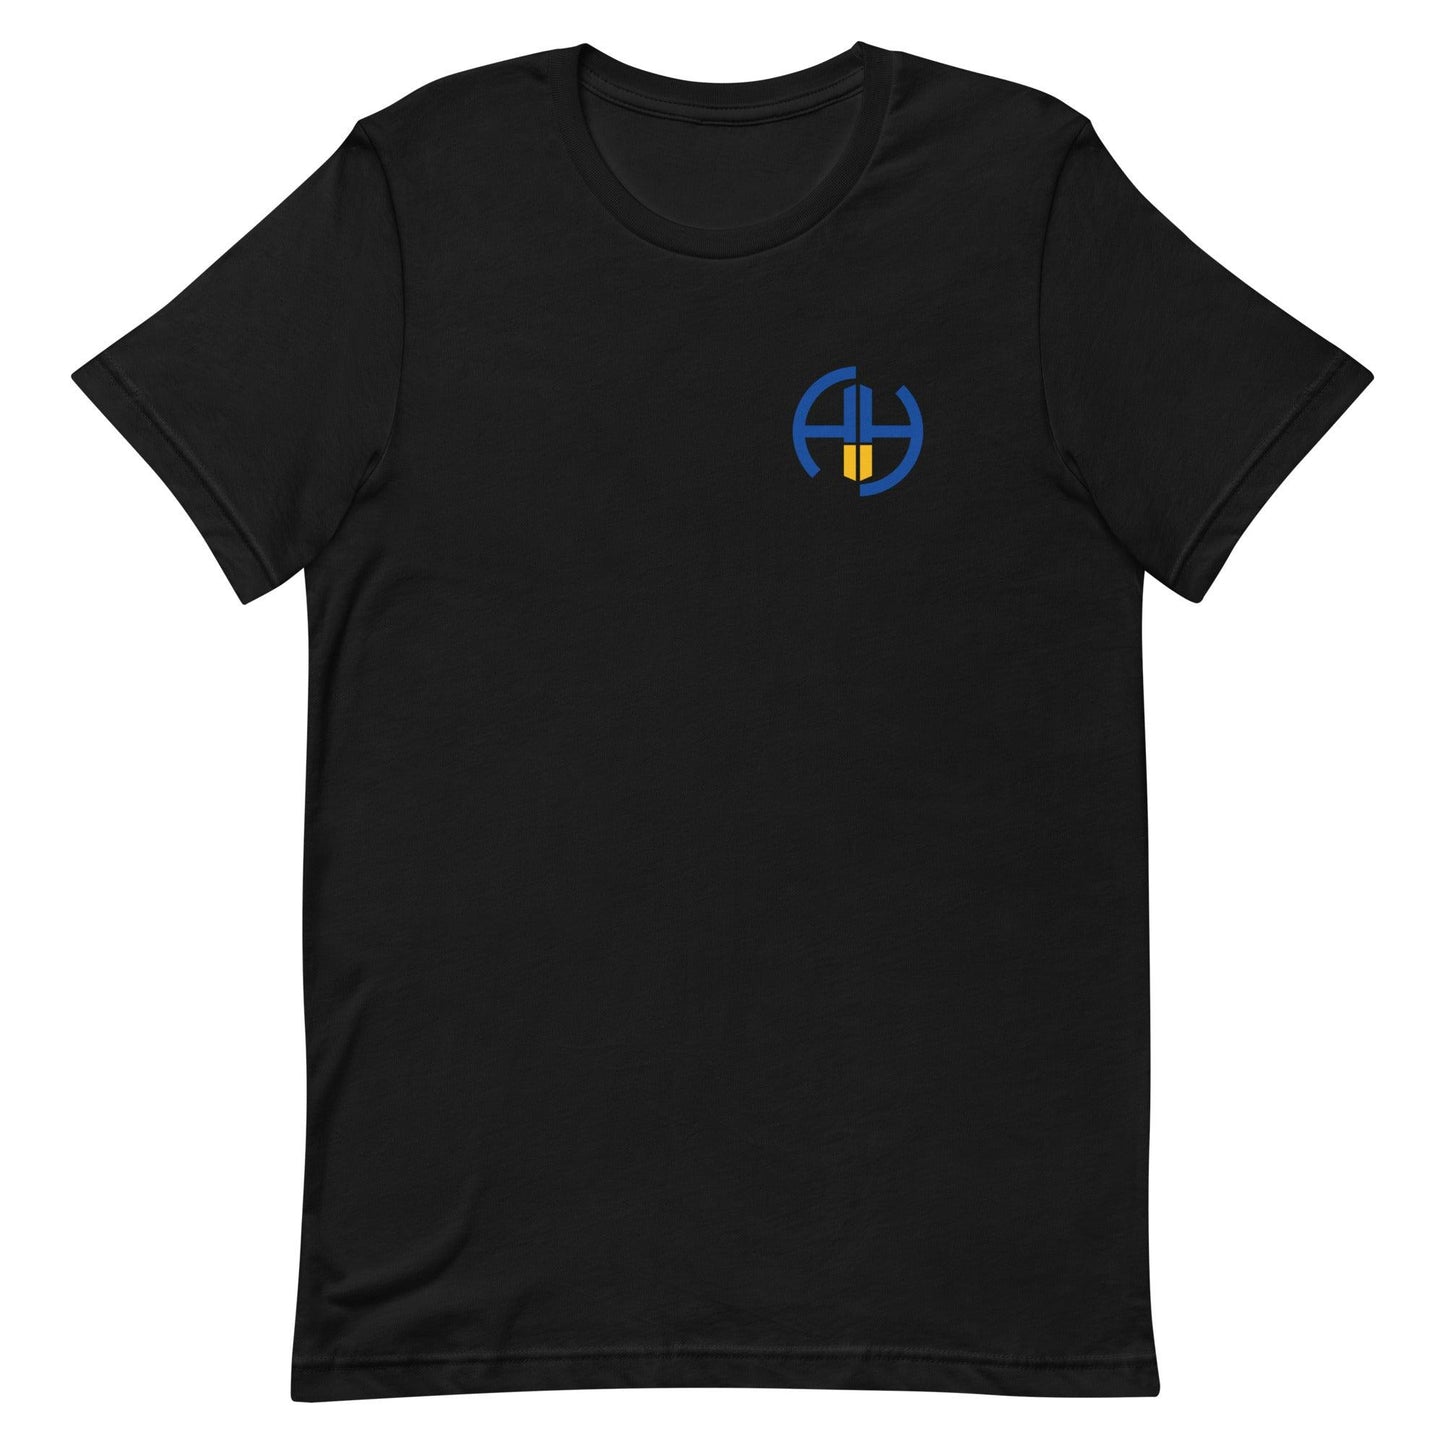 Antoine Holloway II "AHII" t-shirt - Fan Arch